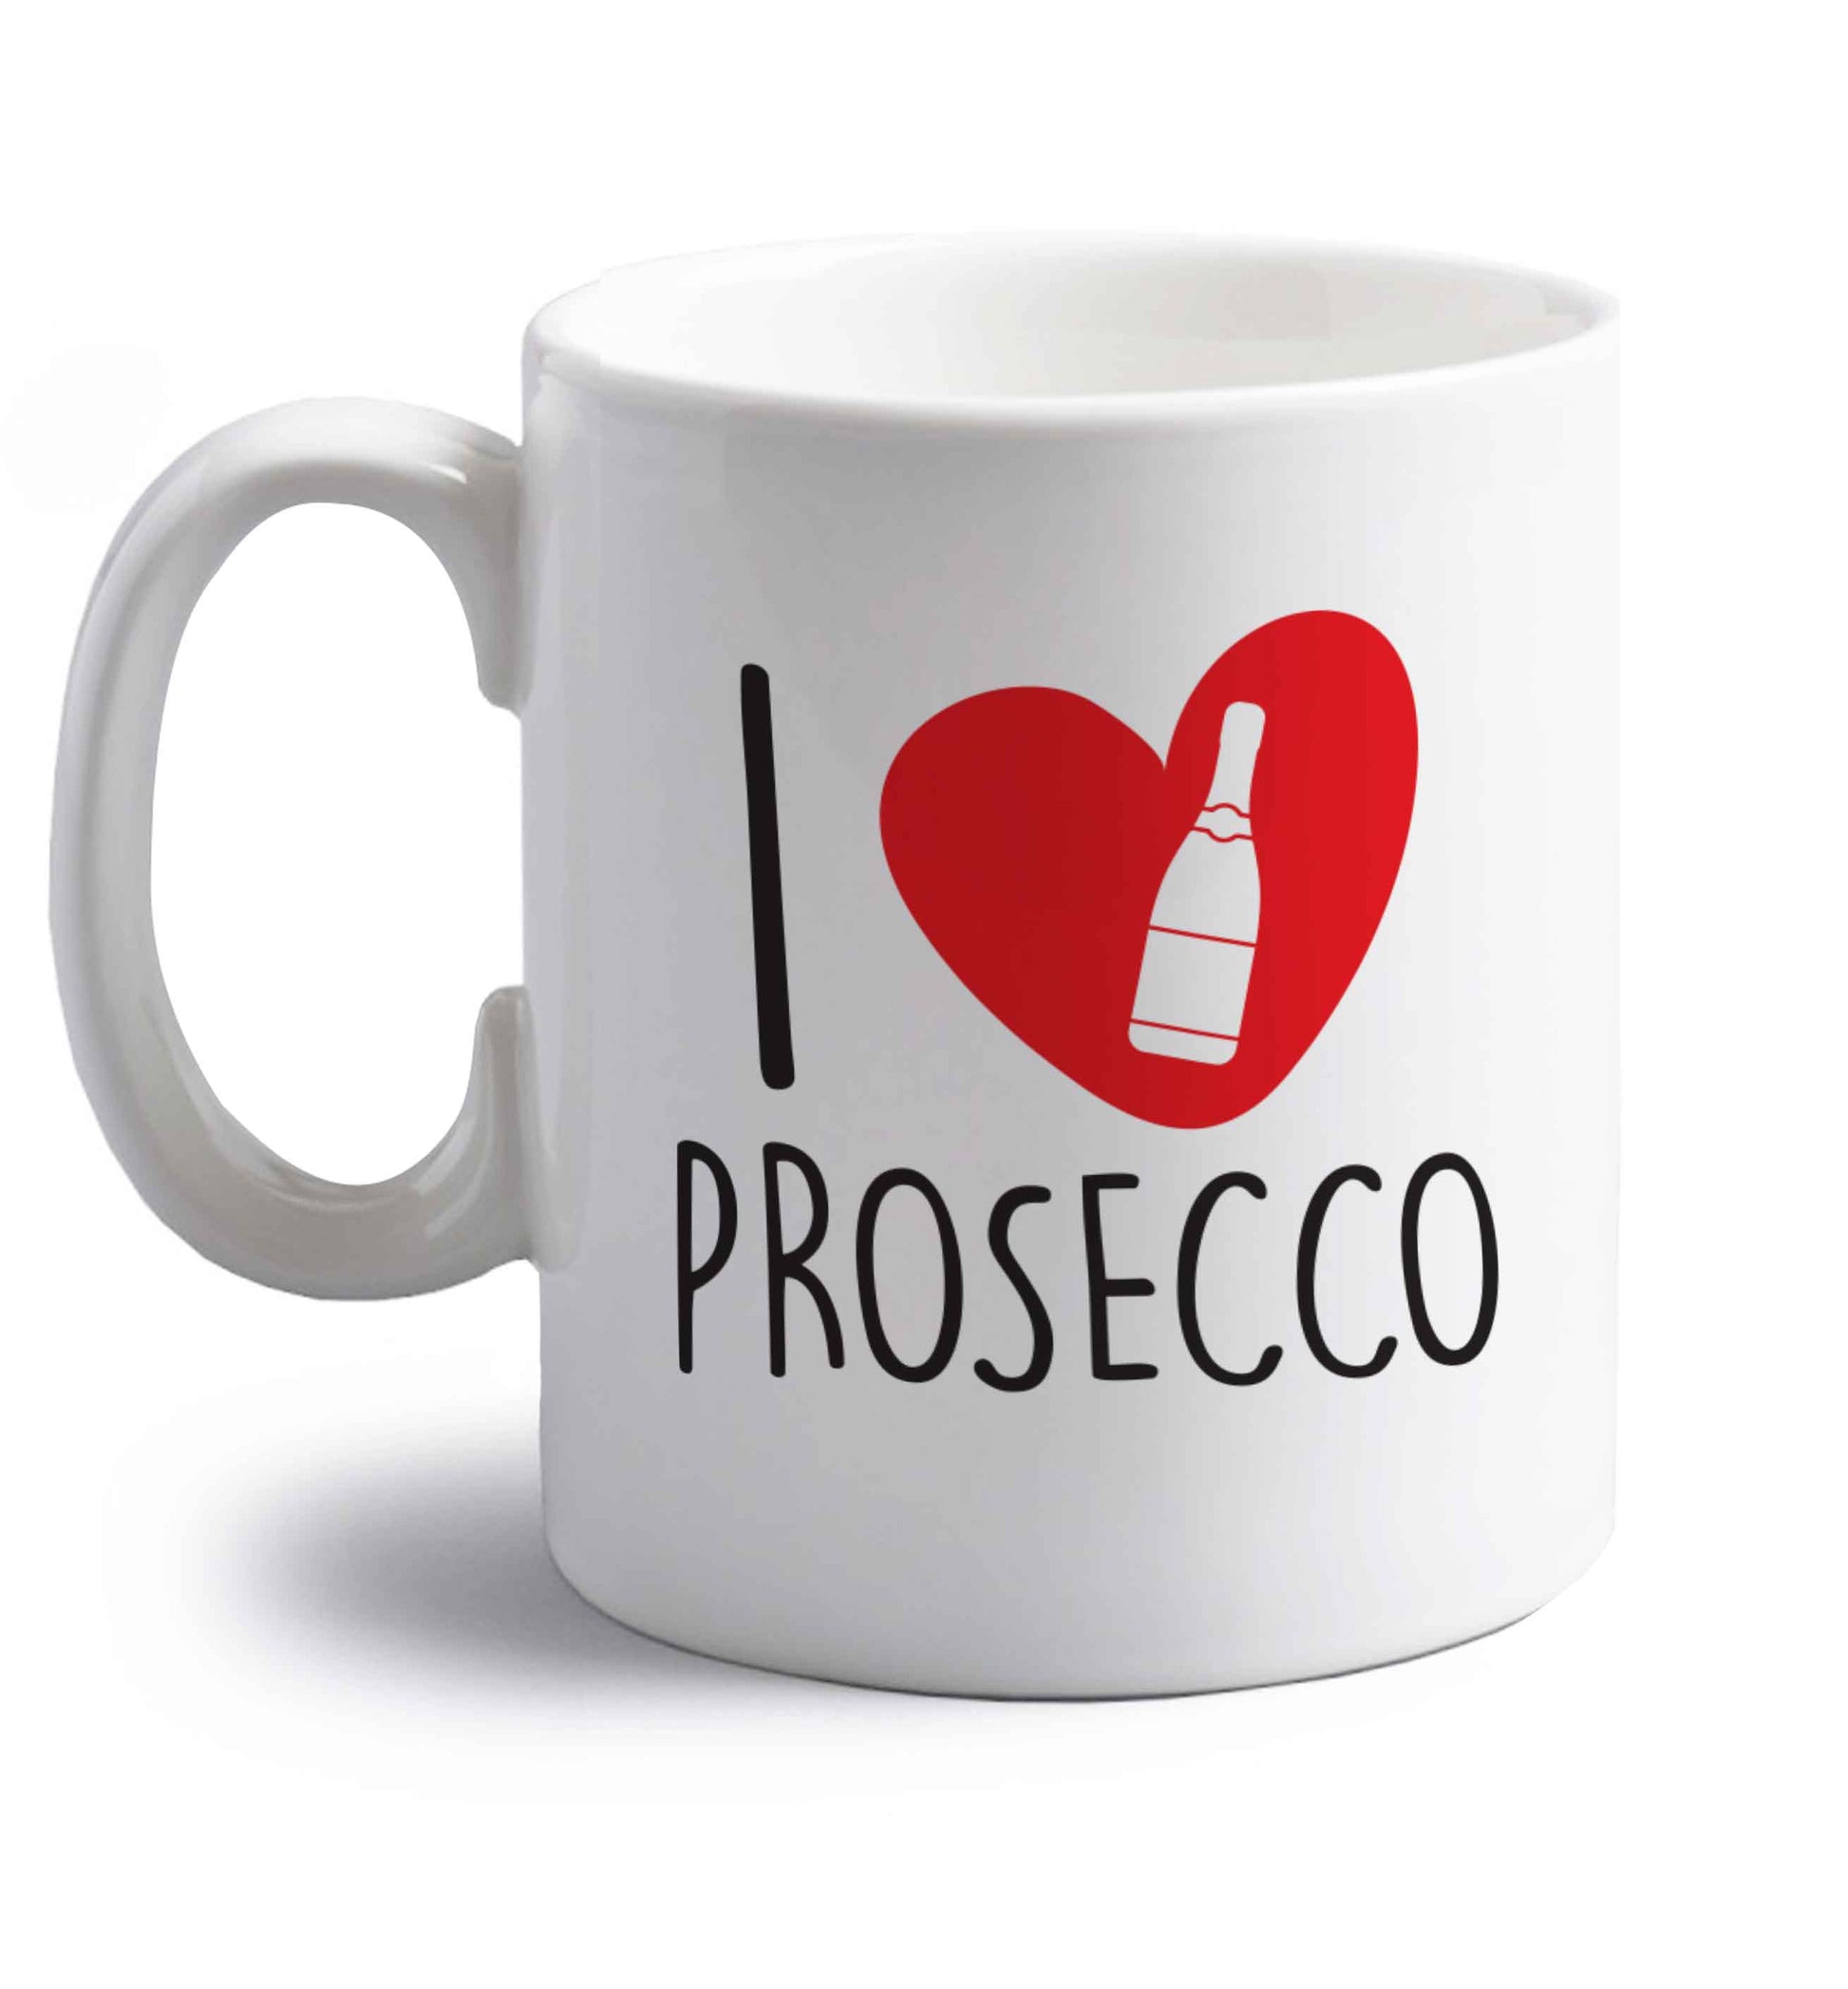 I love prosecco right handed white ceramic mug 